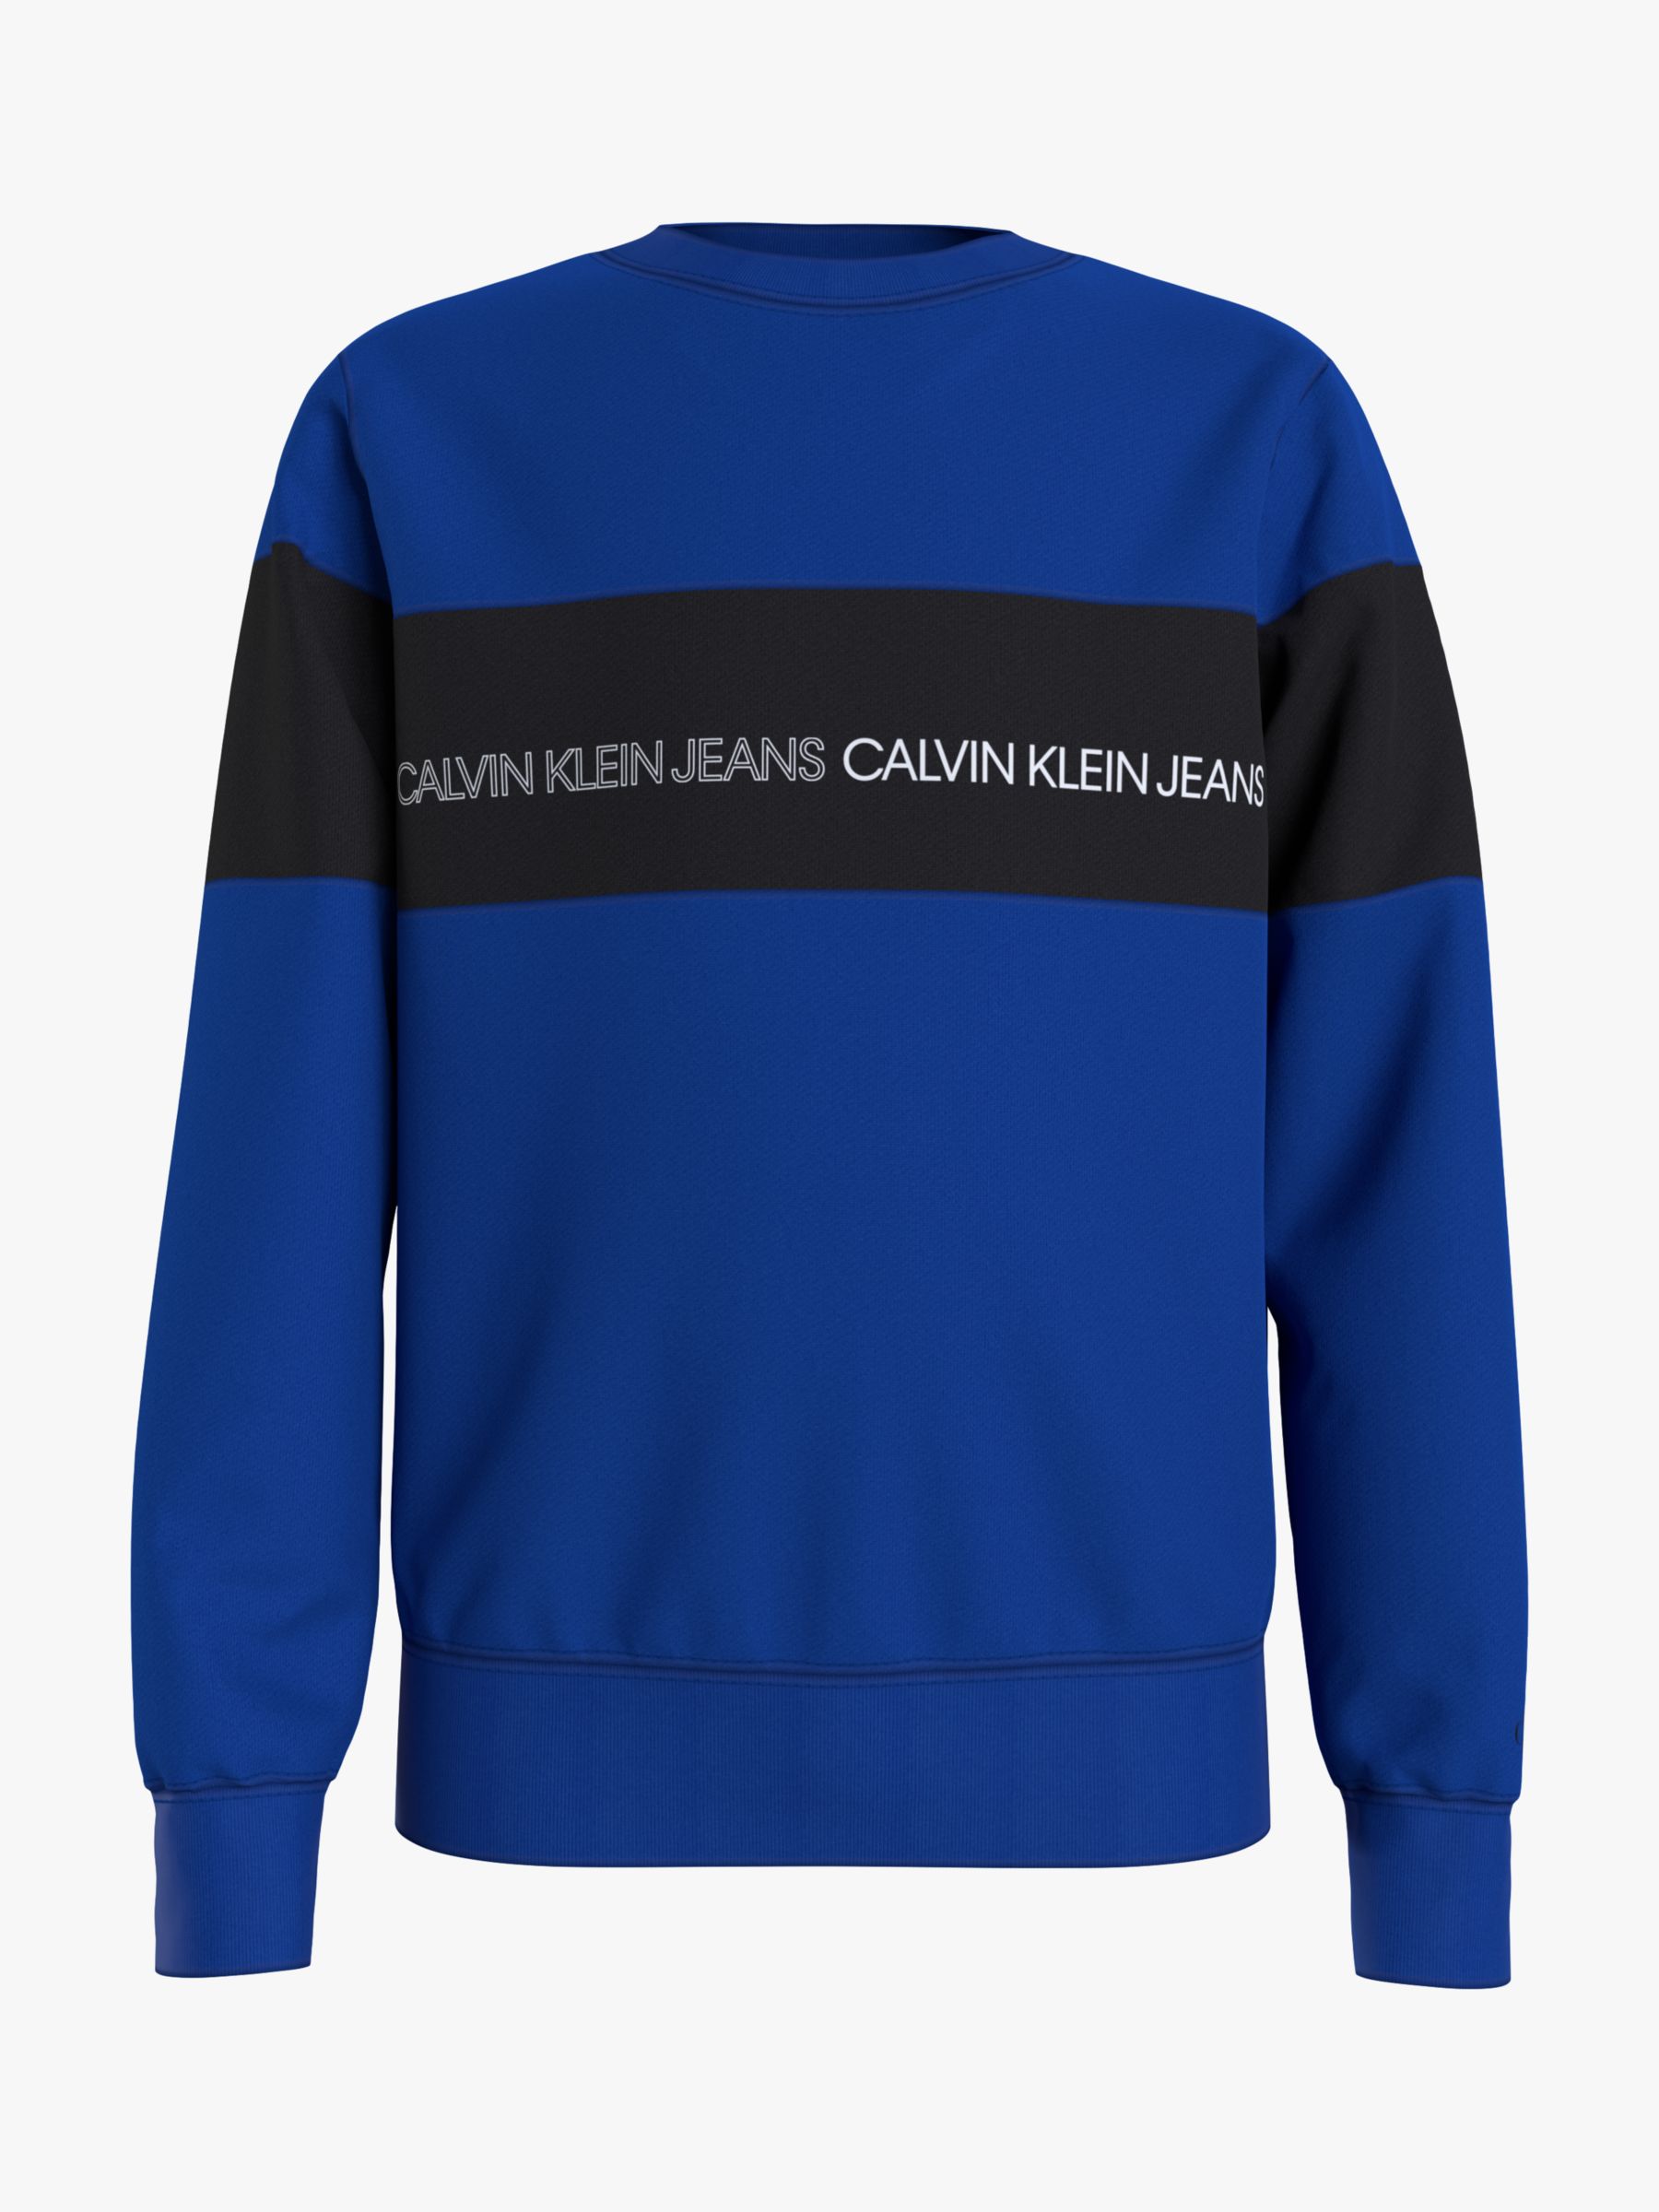 Calvin Klein Kids' Colour Block Logo Sweatshirt, Royal Blue